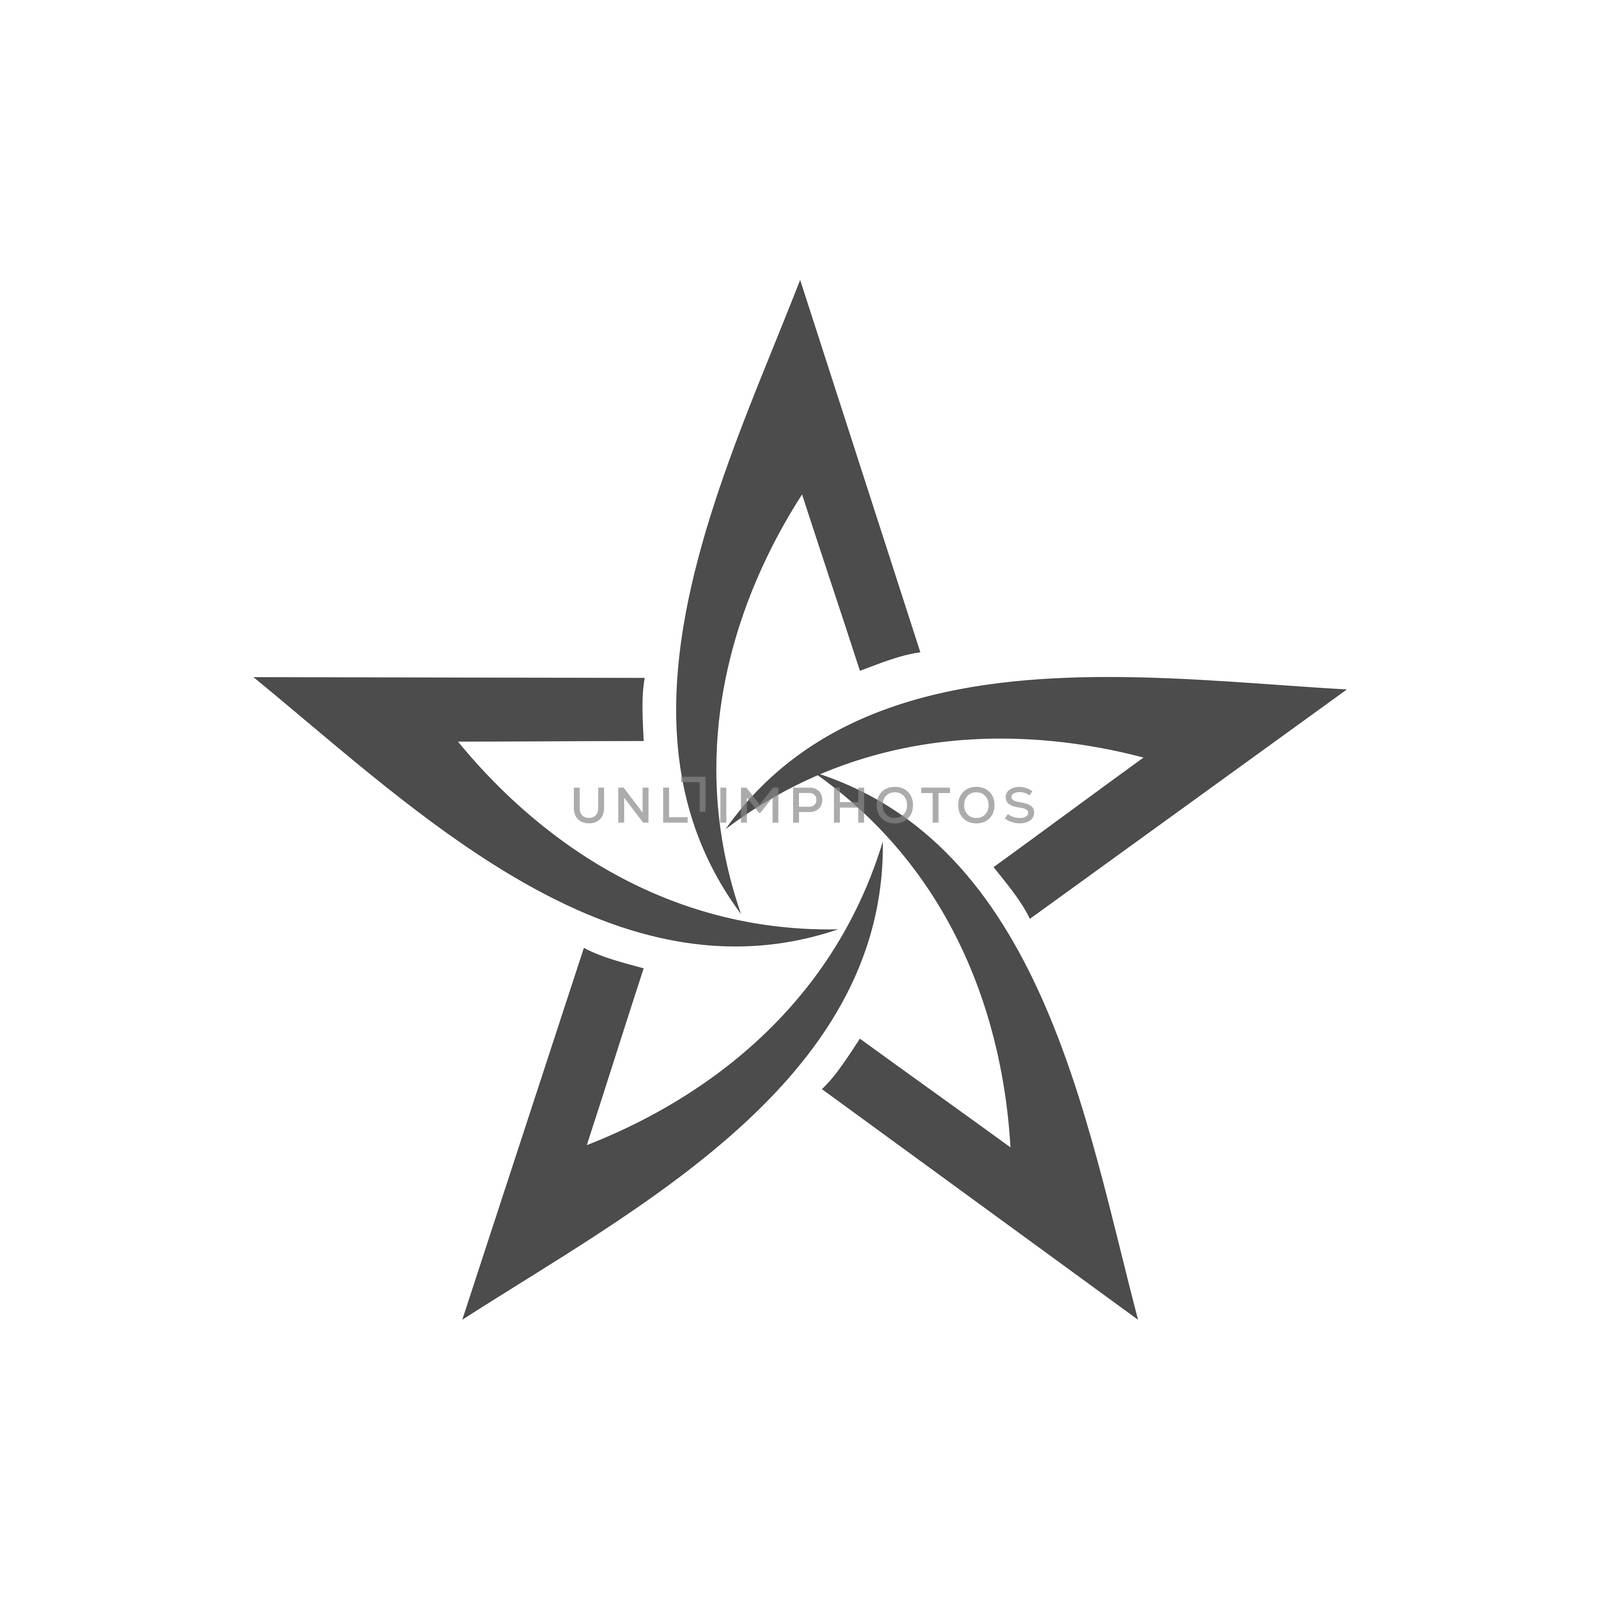 Ornamental Grey Star Logo Template Illustration Design EPS 10 by soponyono1